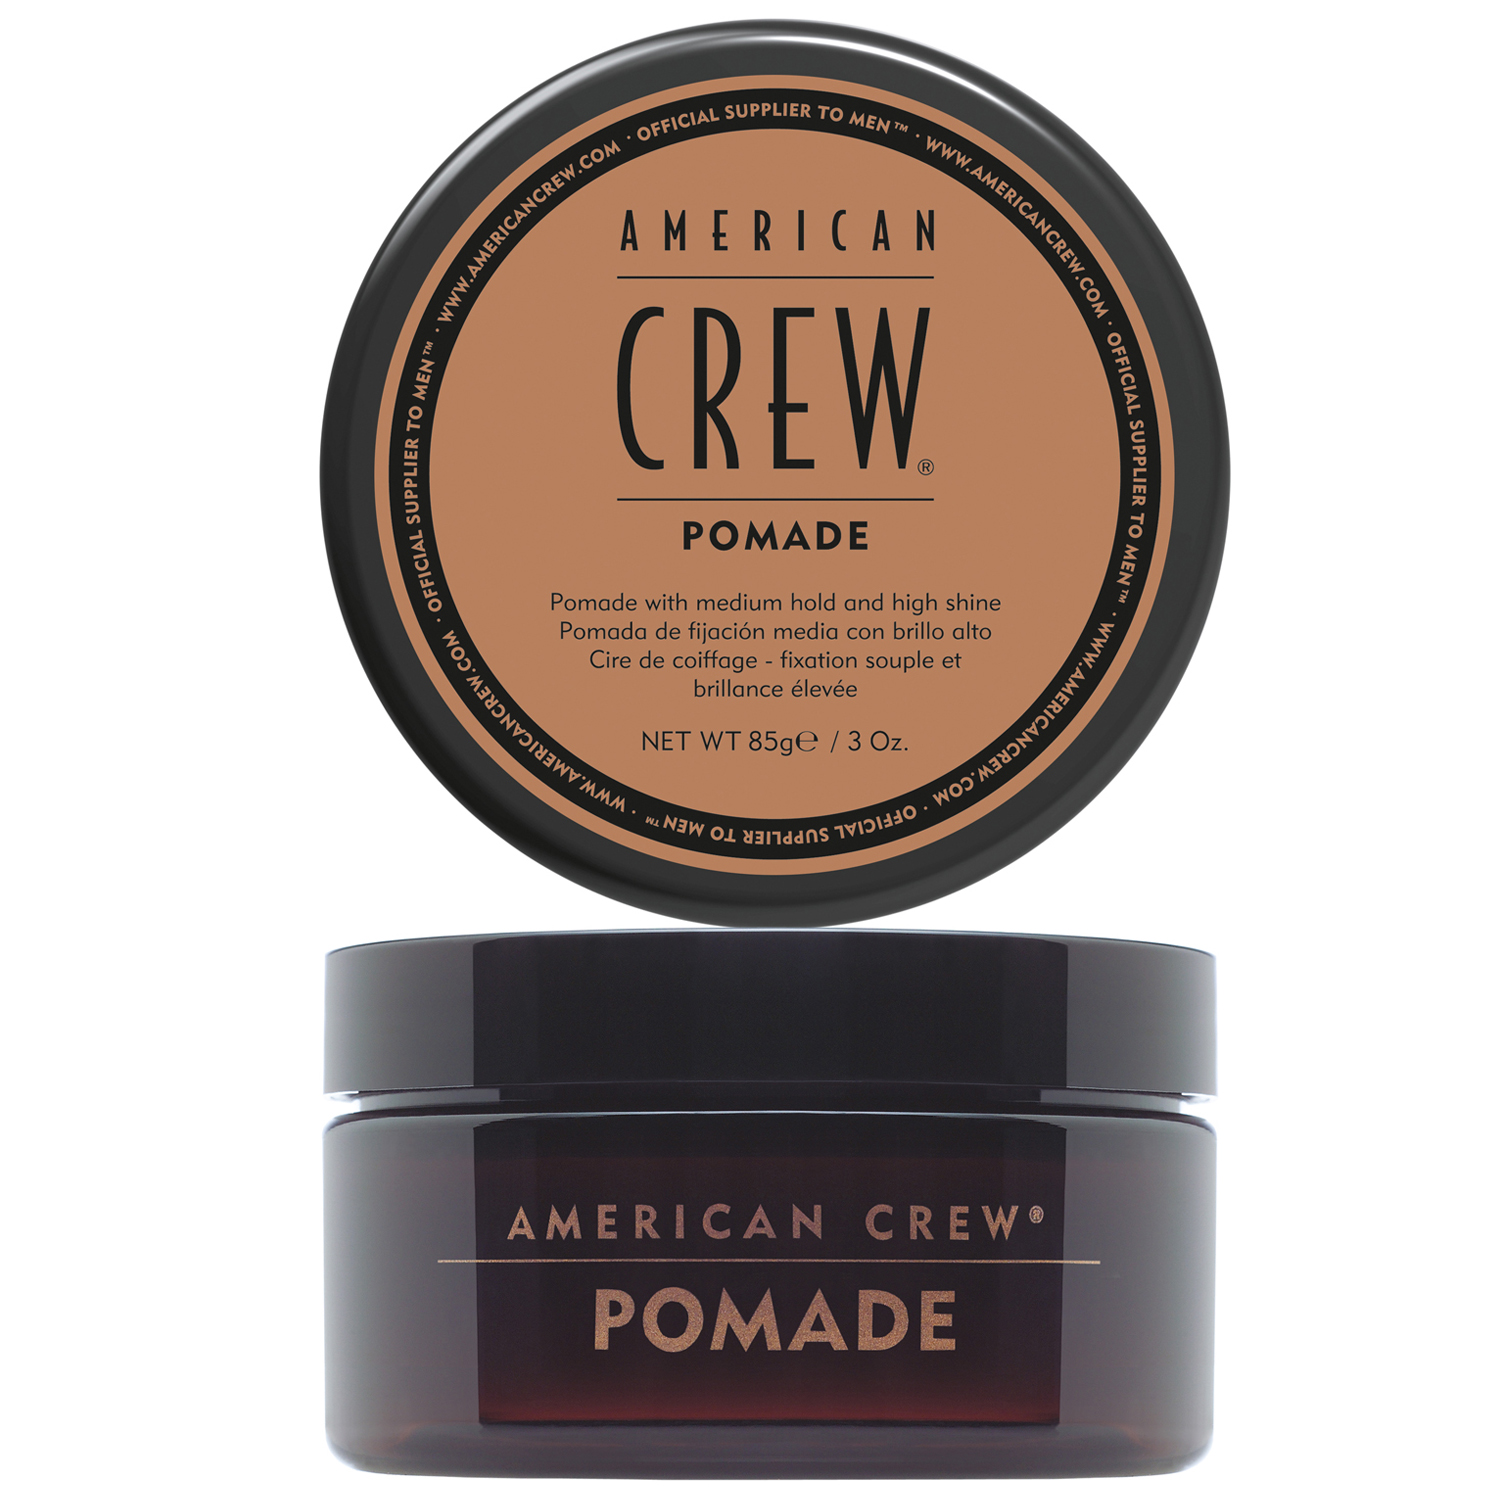 American Crew Помада для укладки волос средней фиксации Pomade, 85 мл (American Crew, Styling) axe classic pomade средней фиксации для яркого блеска 75 г 2 64 унции